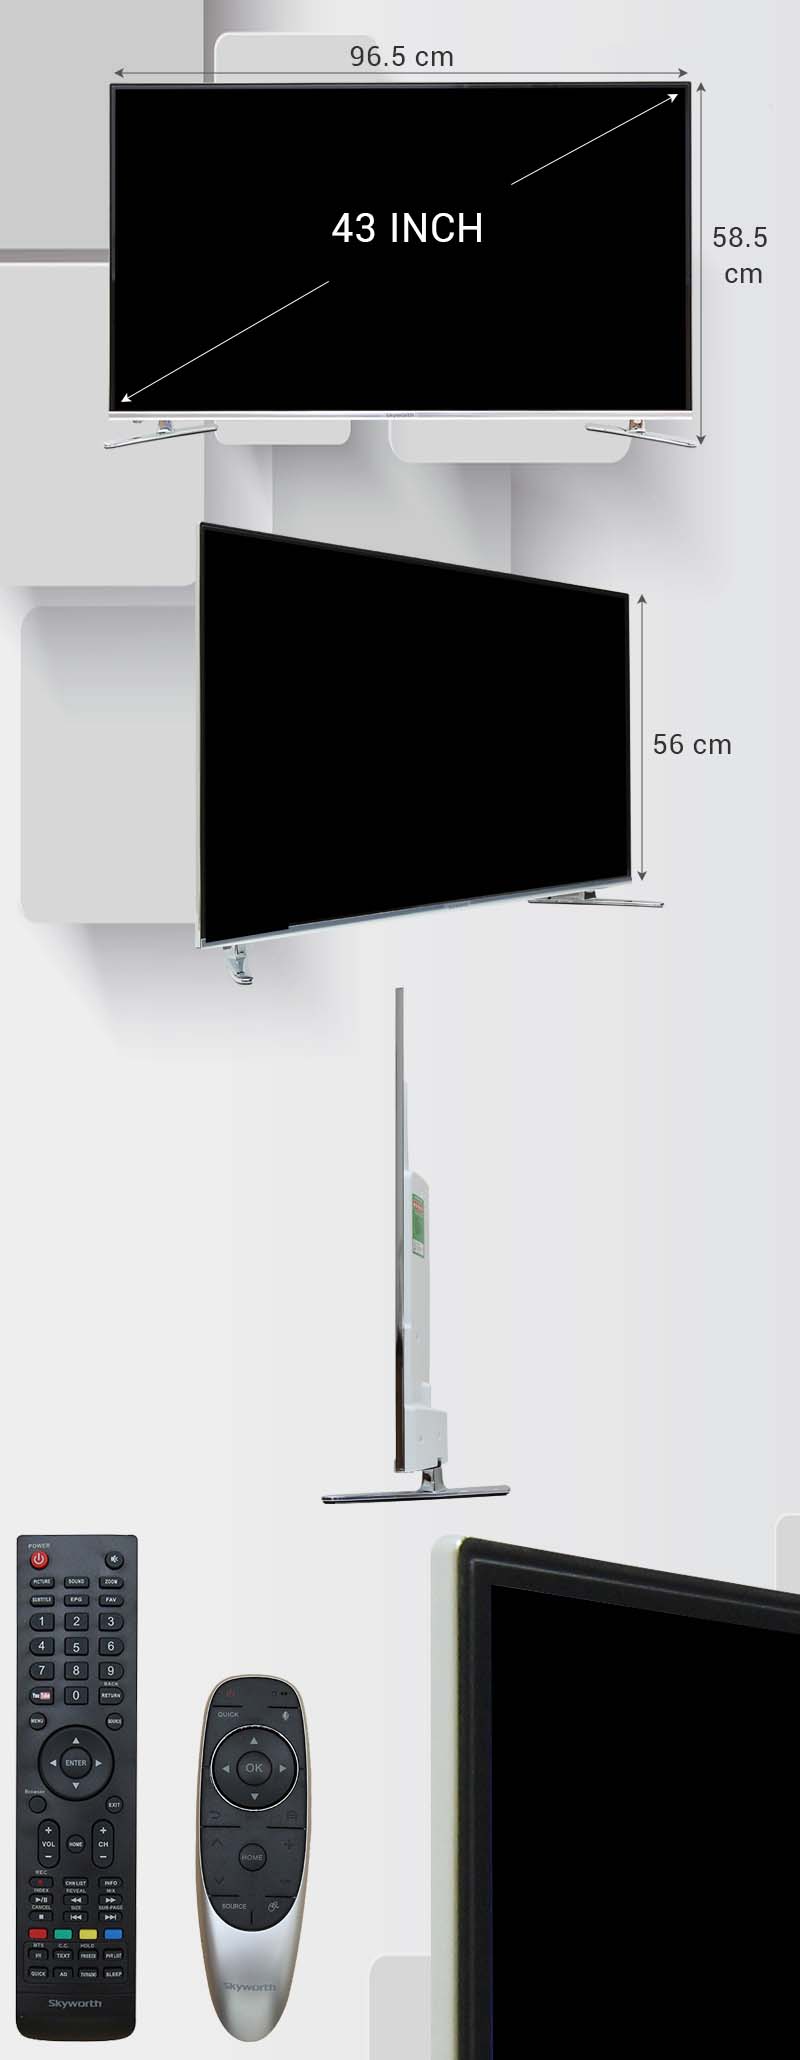 Smart Tivi Skyworth GLED 43 inch 43K920S - Kích thước TV